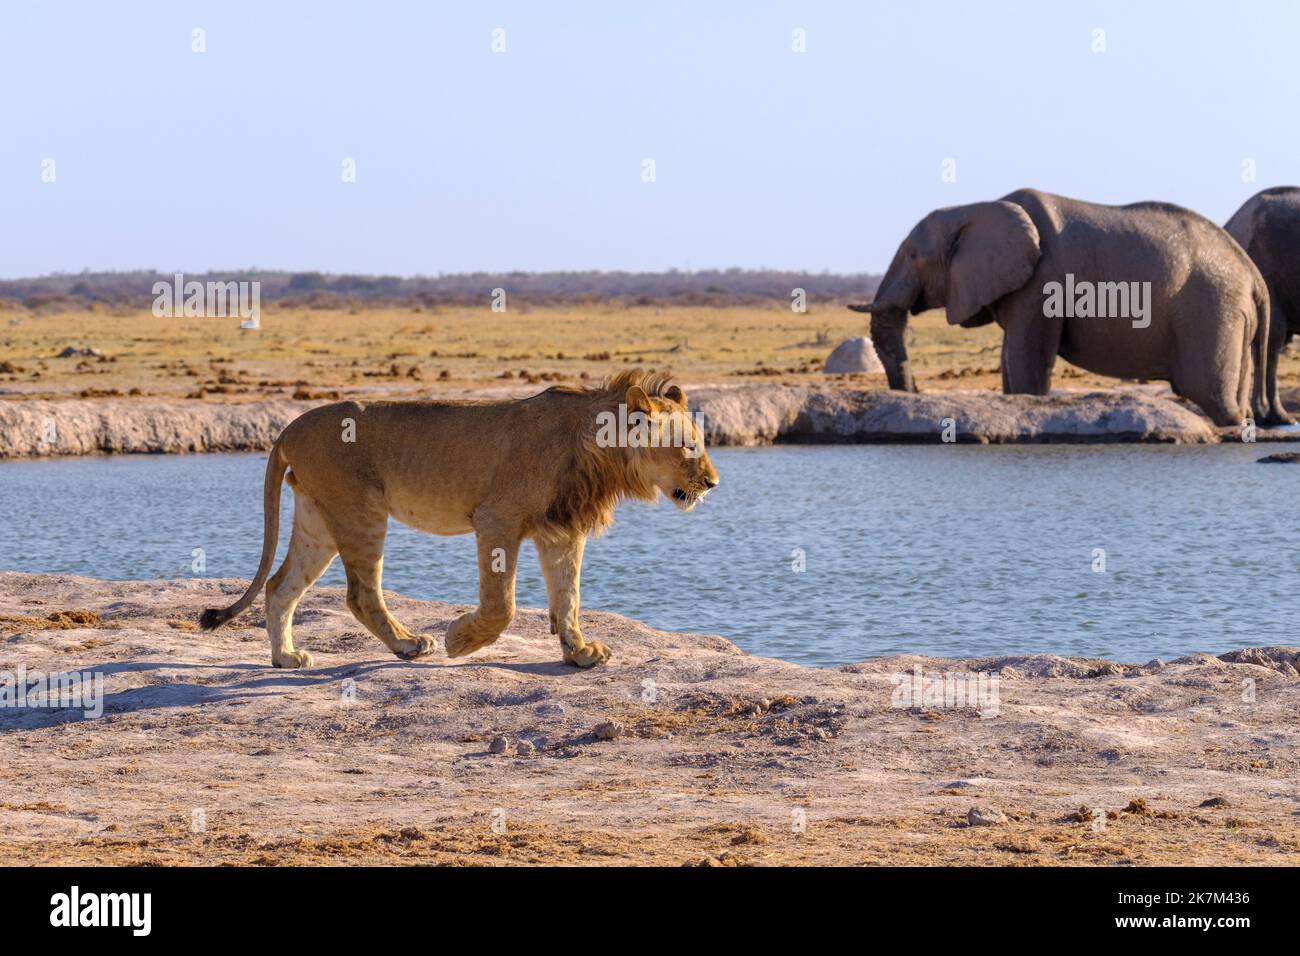 Junger Löwe (Panthera leo) überquert ein Wasserloch, dahinter sind Elefanten. Nxai Pan, Botswana, Afrika Stockfoto